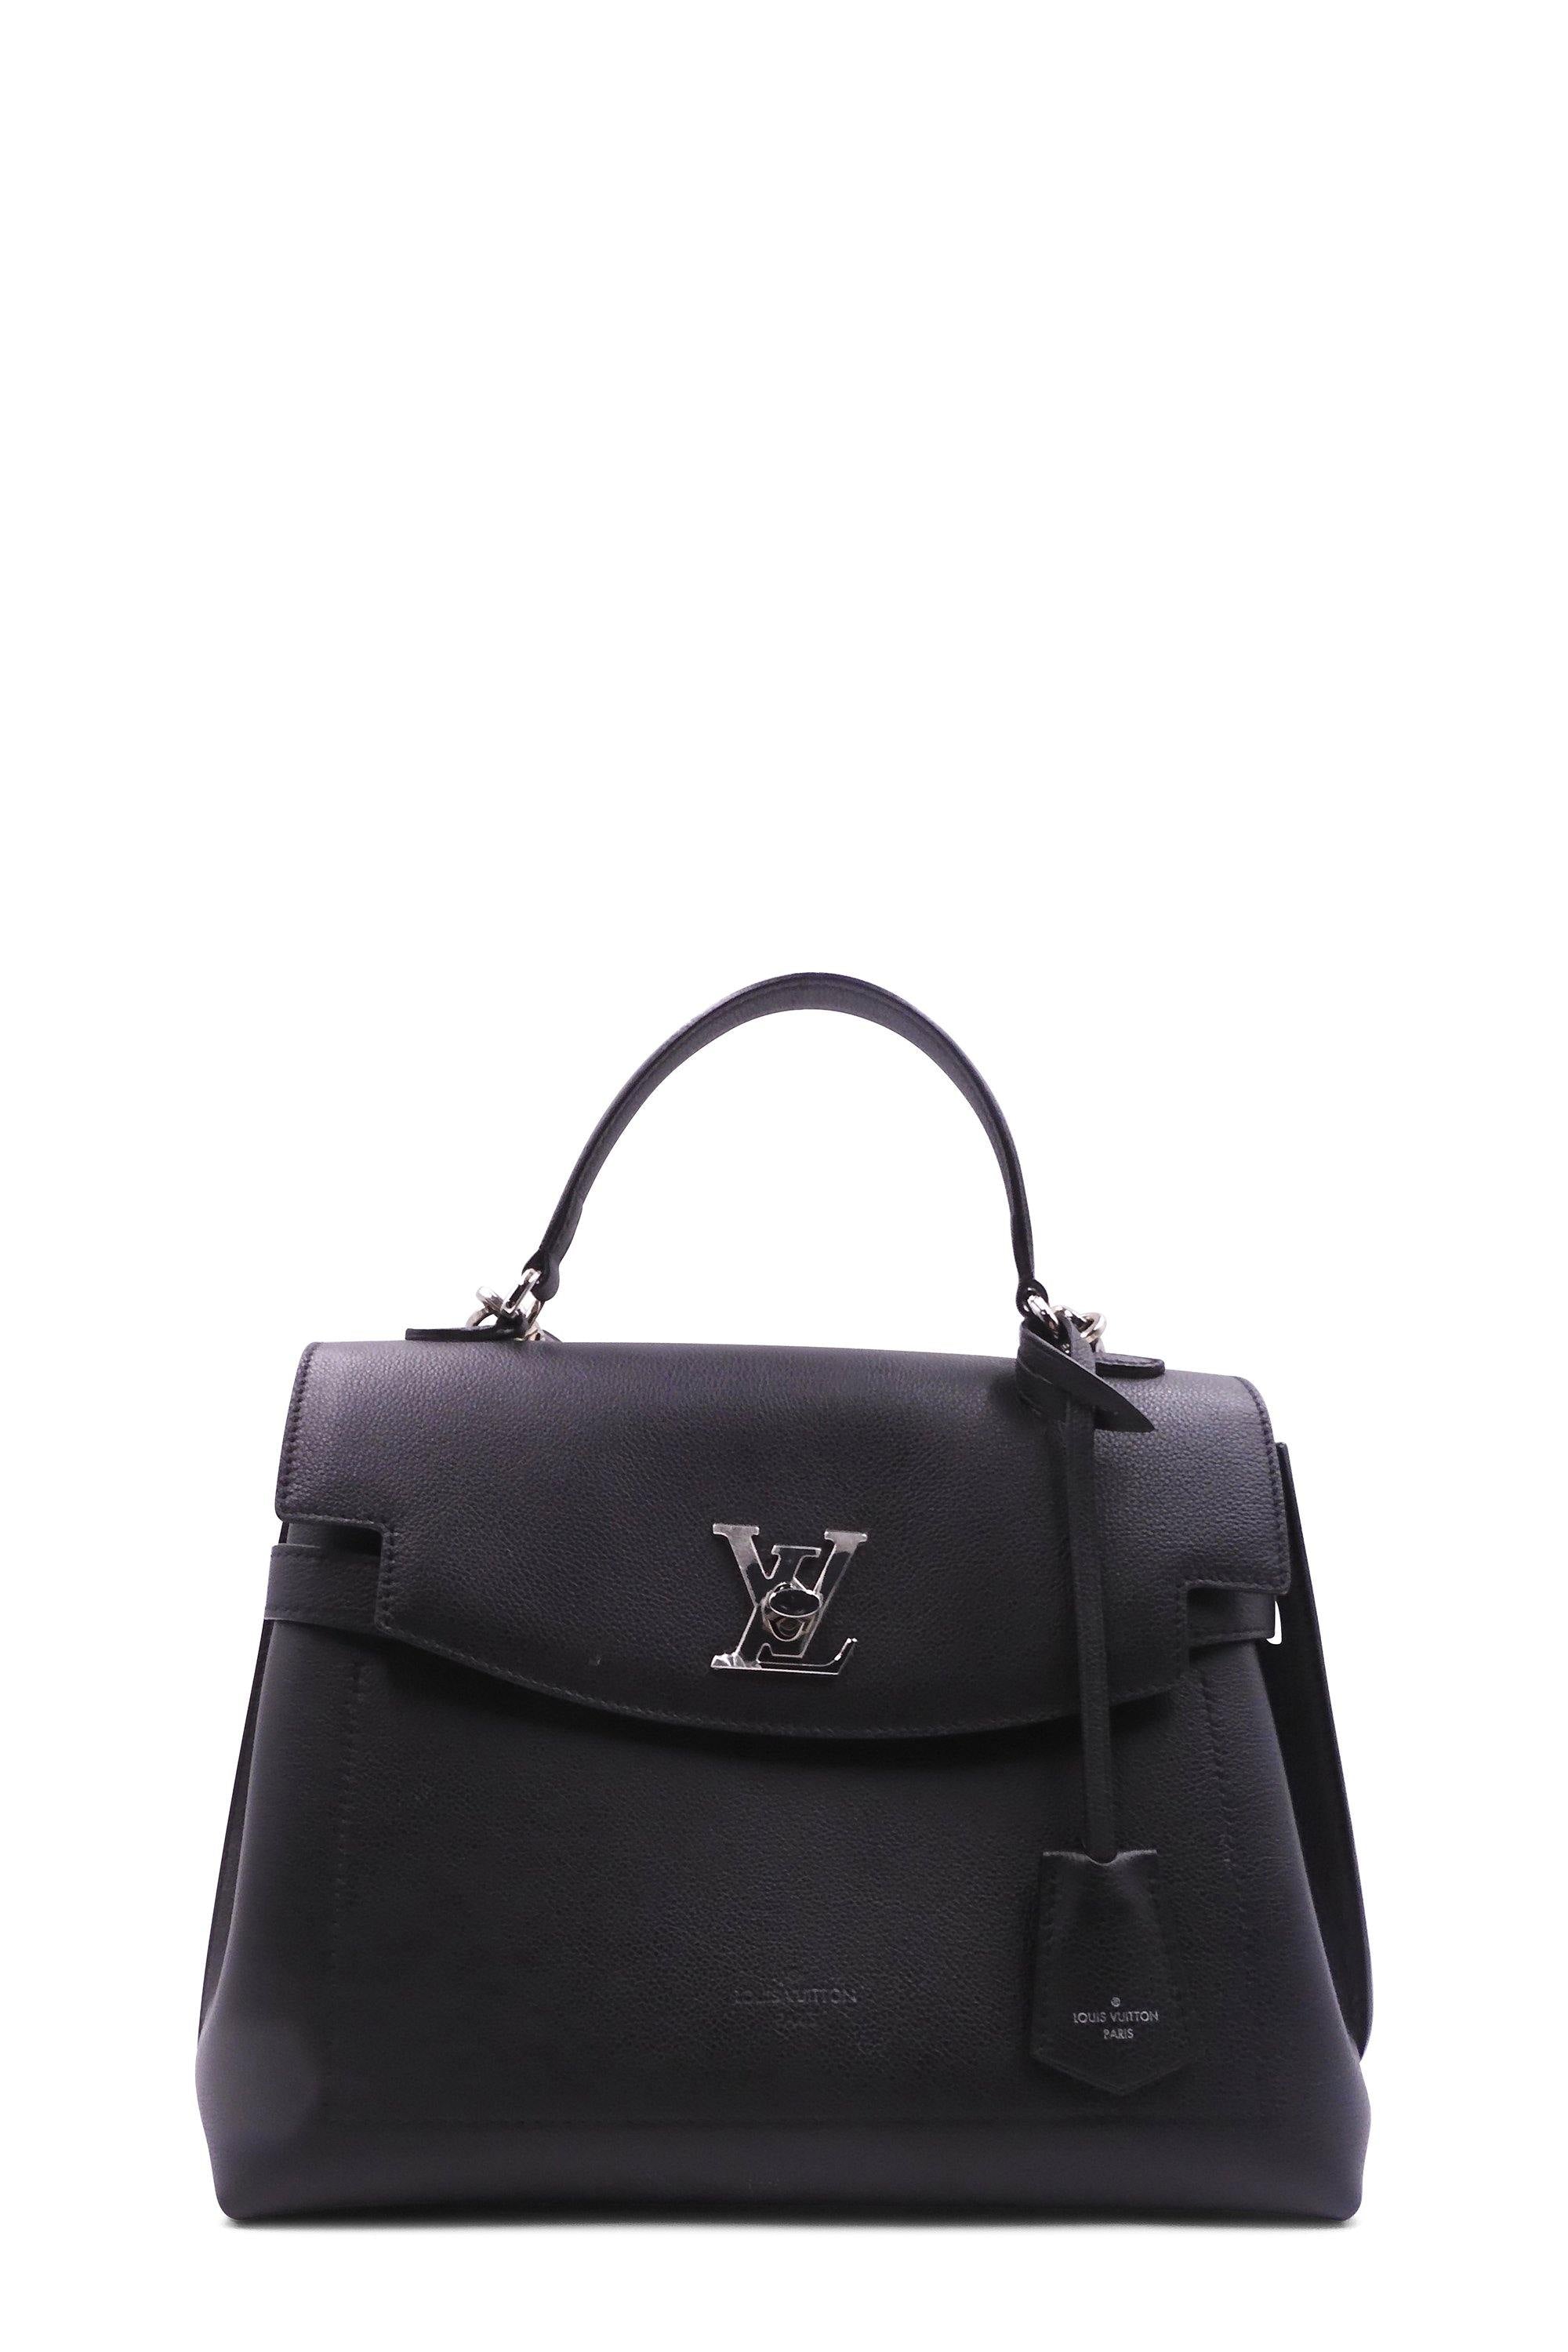 Louis Vuitton Lockme Ever mm, Black, One Size